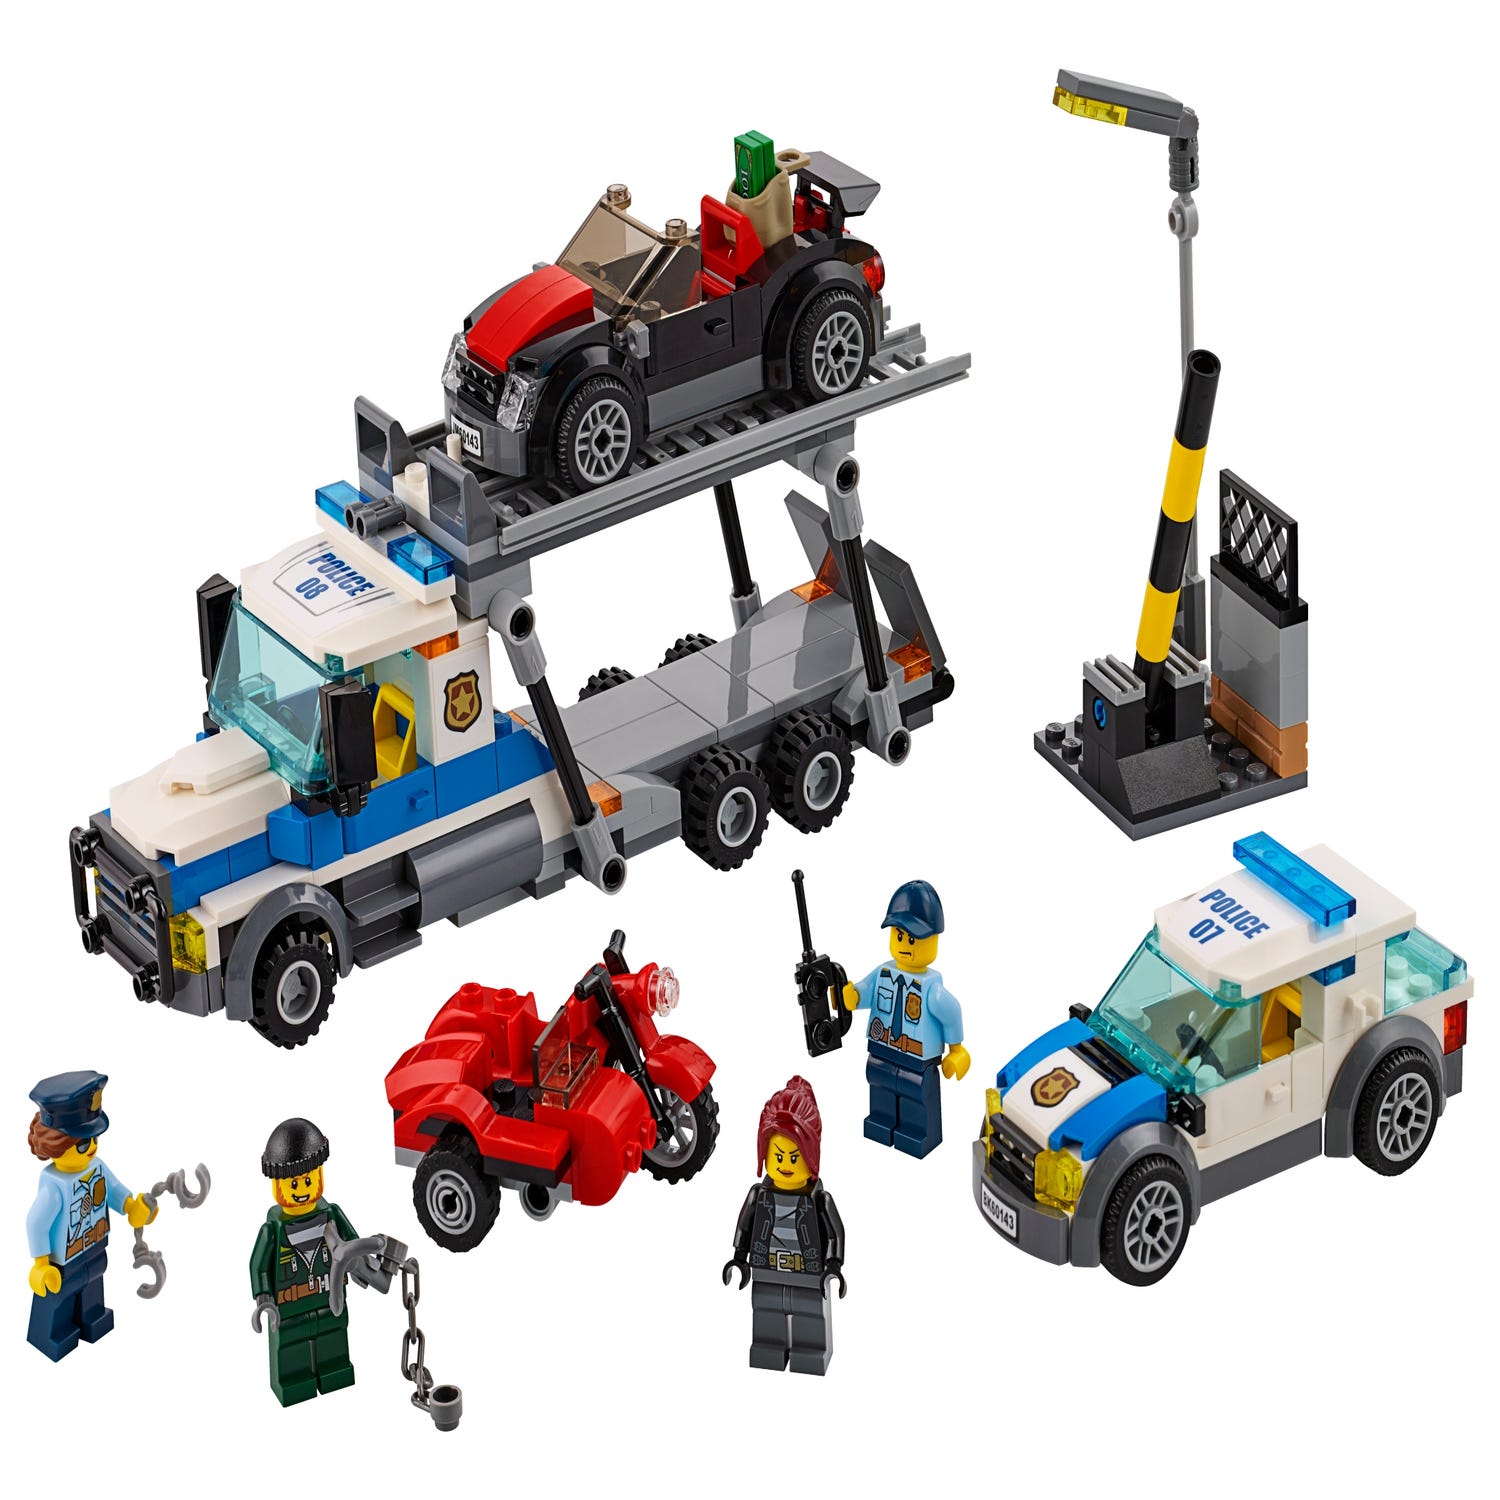 delikatesse Bank Sømil Auto Transport Heist 60143 | City | Buy online at the Official LEGO® Shop US